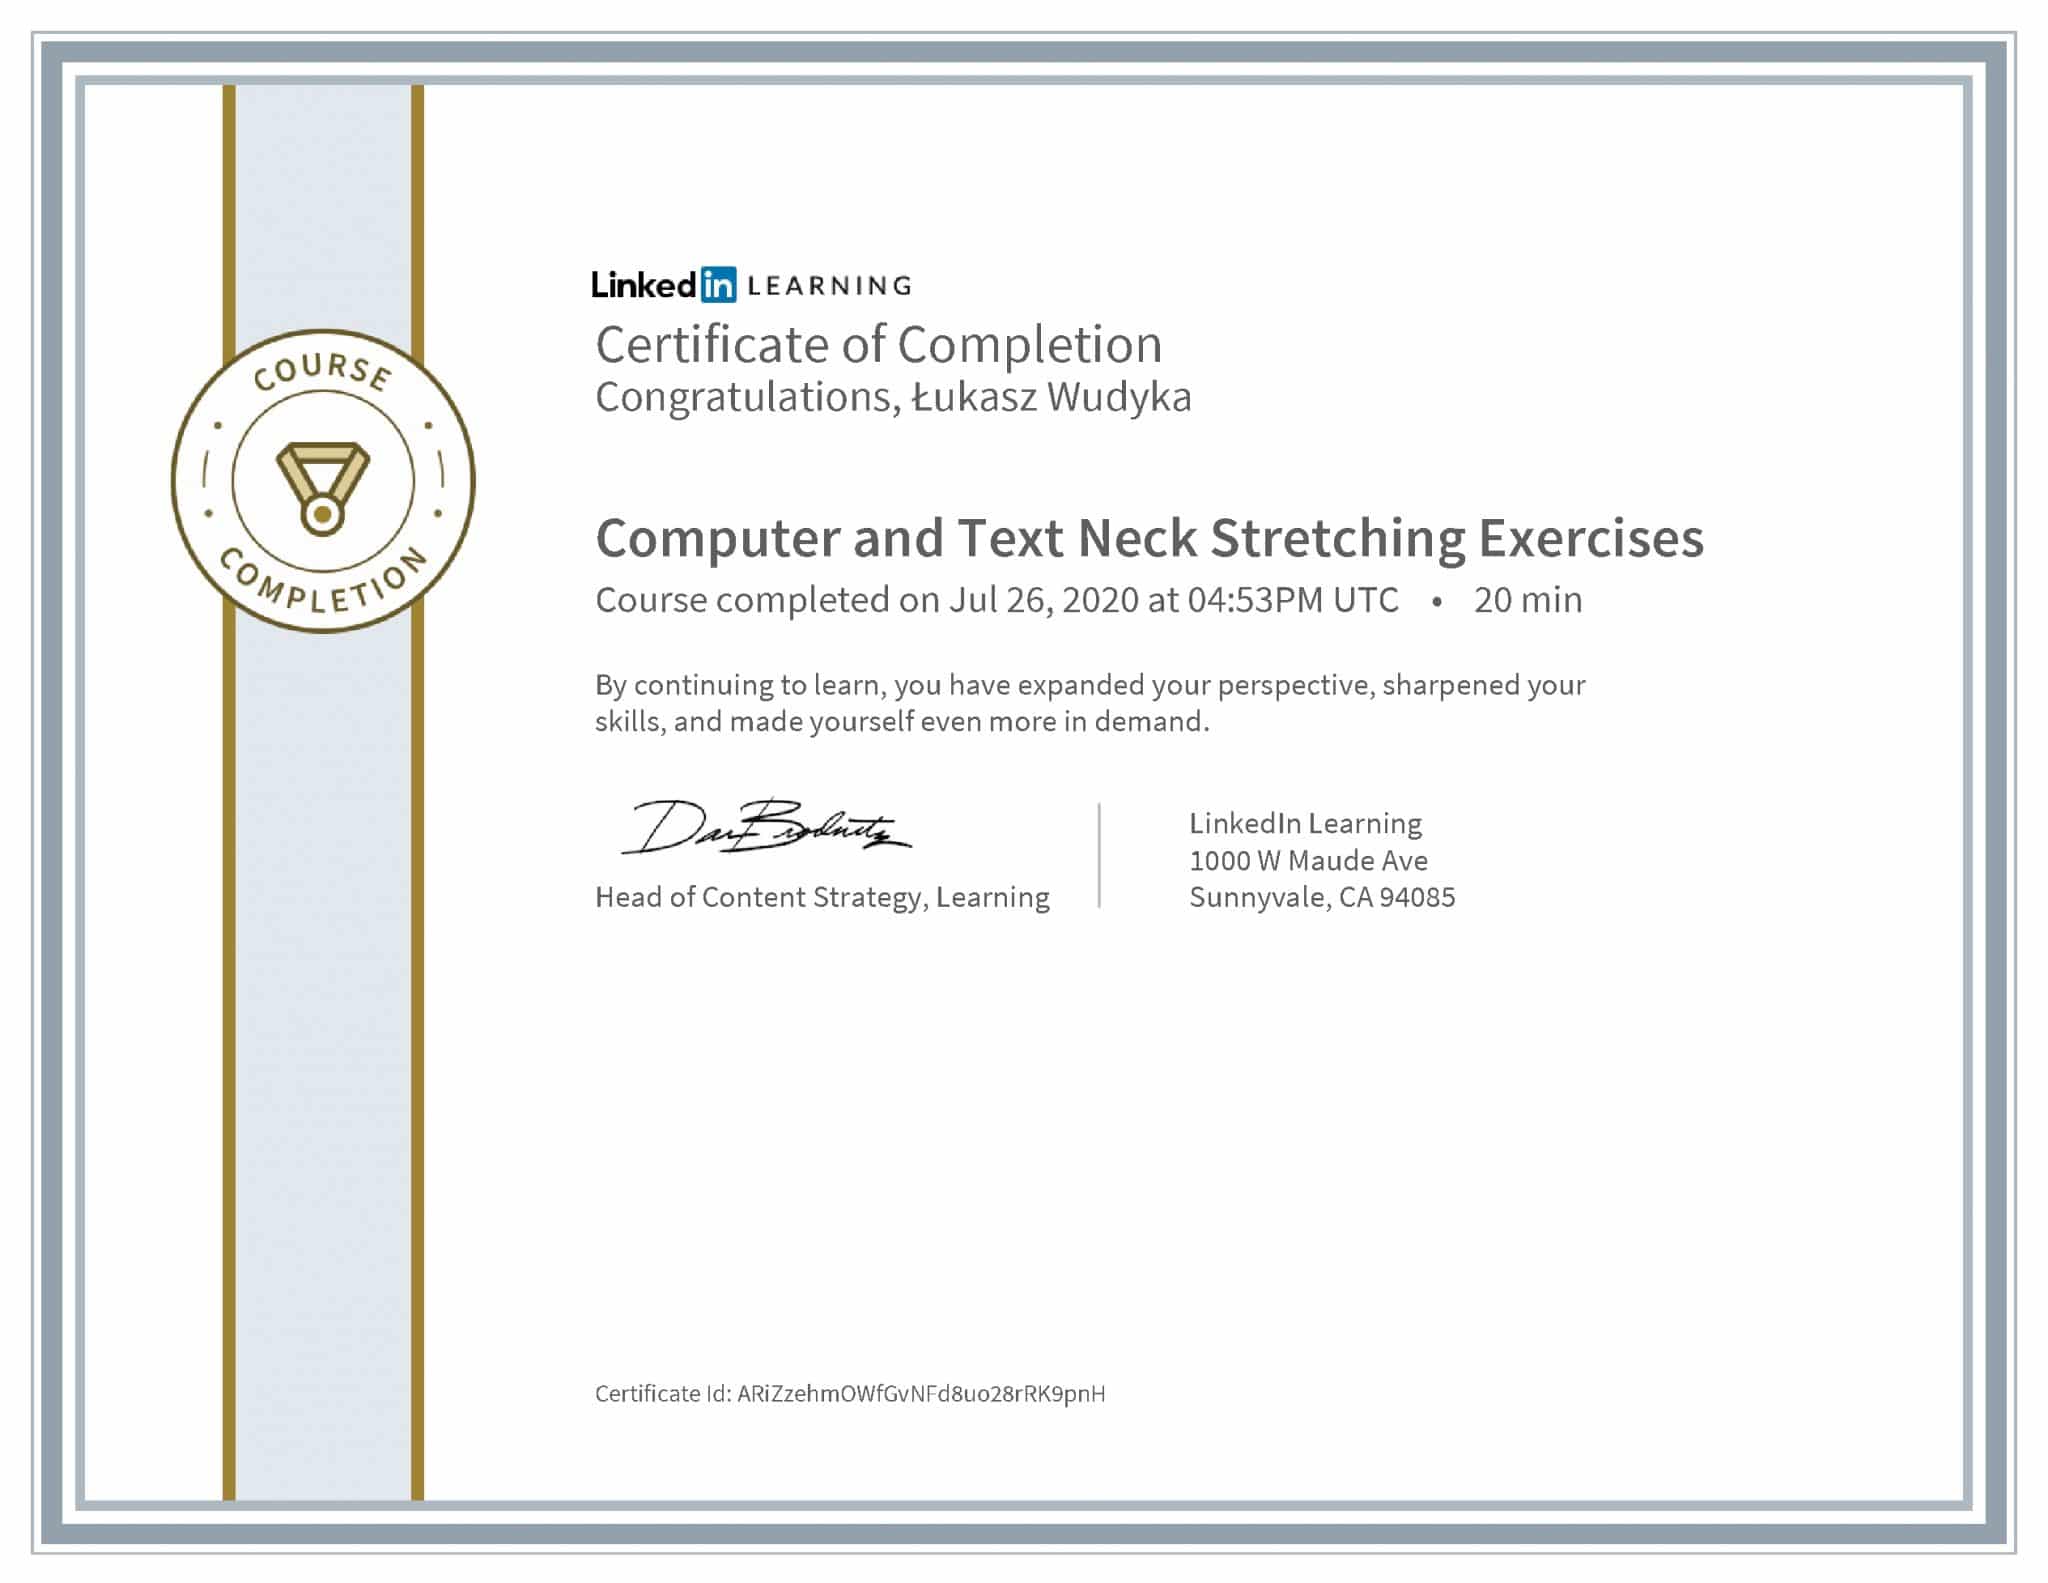 Łukasz Wudyka certyfikat LinkedIn Computer and Text Neck Stretching Exercises